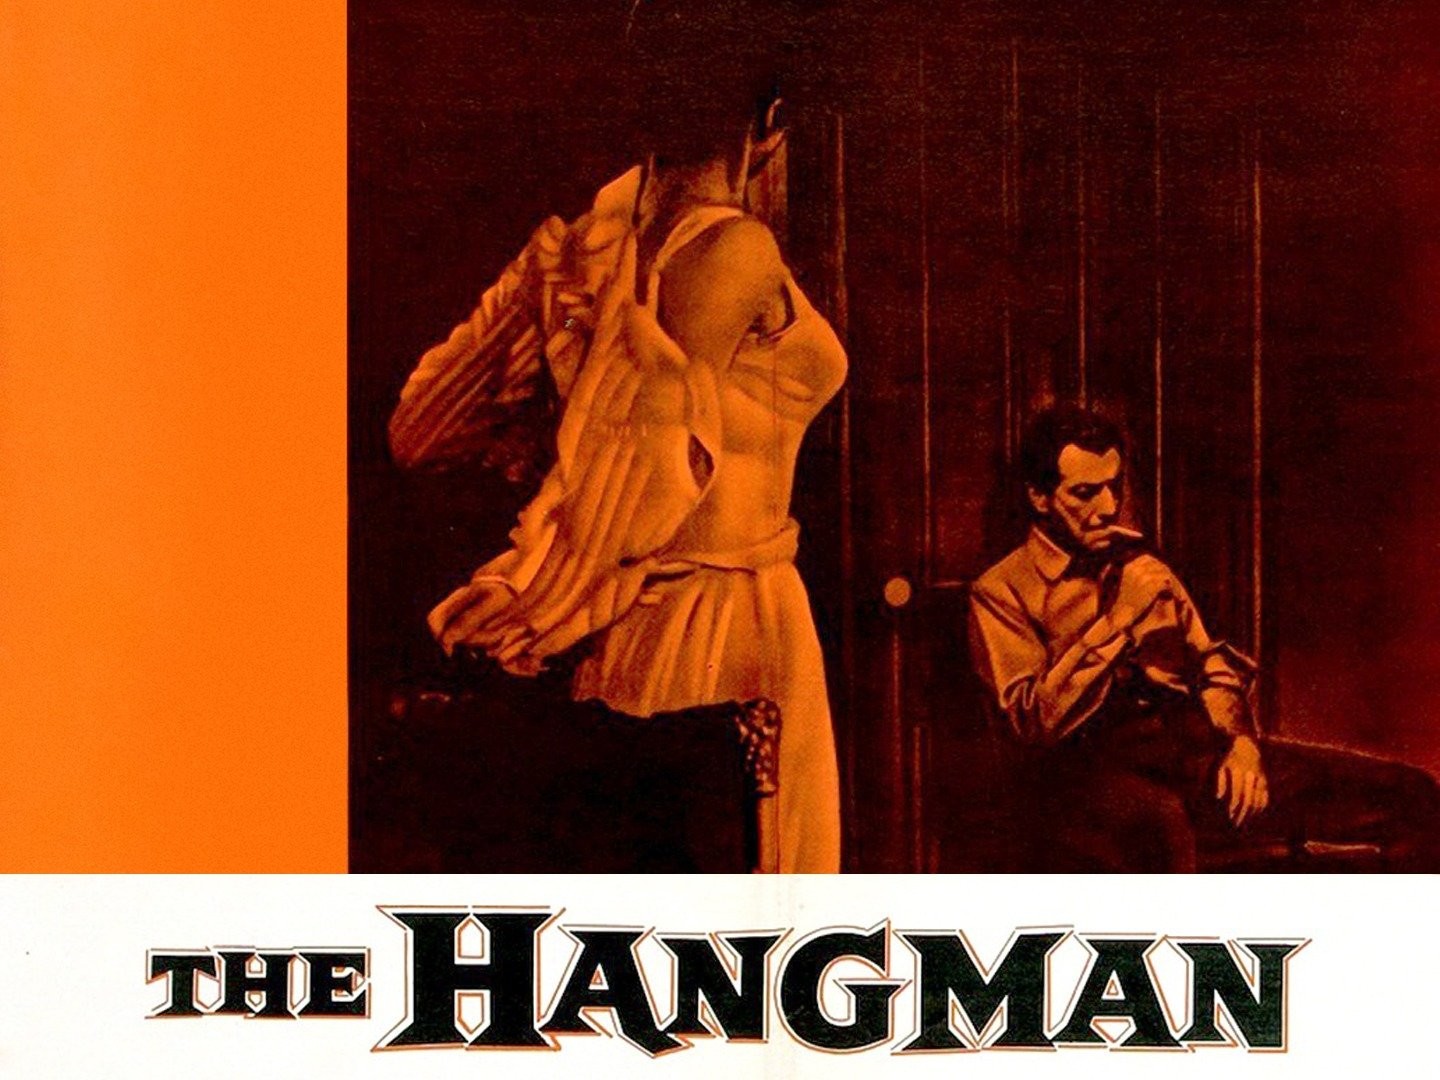 THE HANGMAN